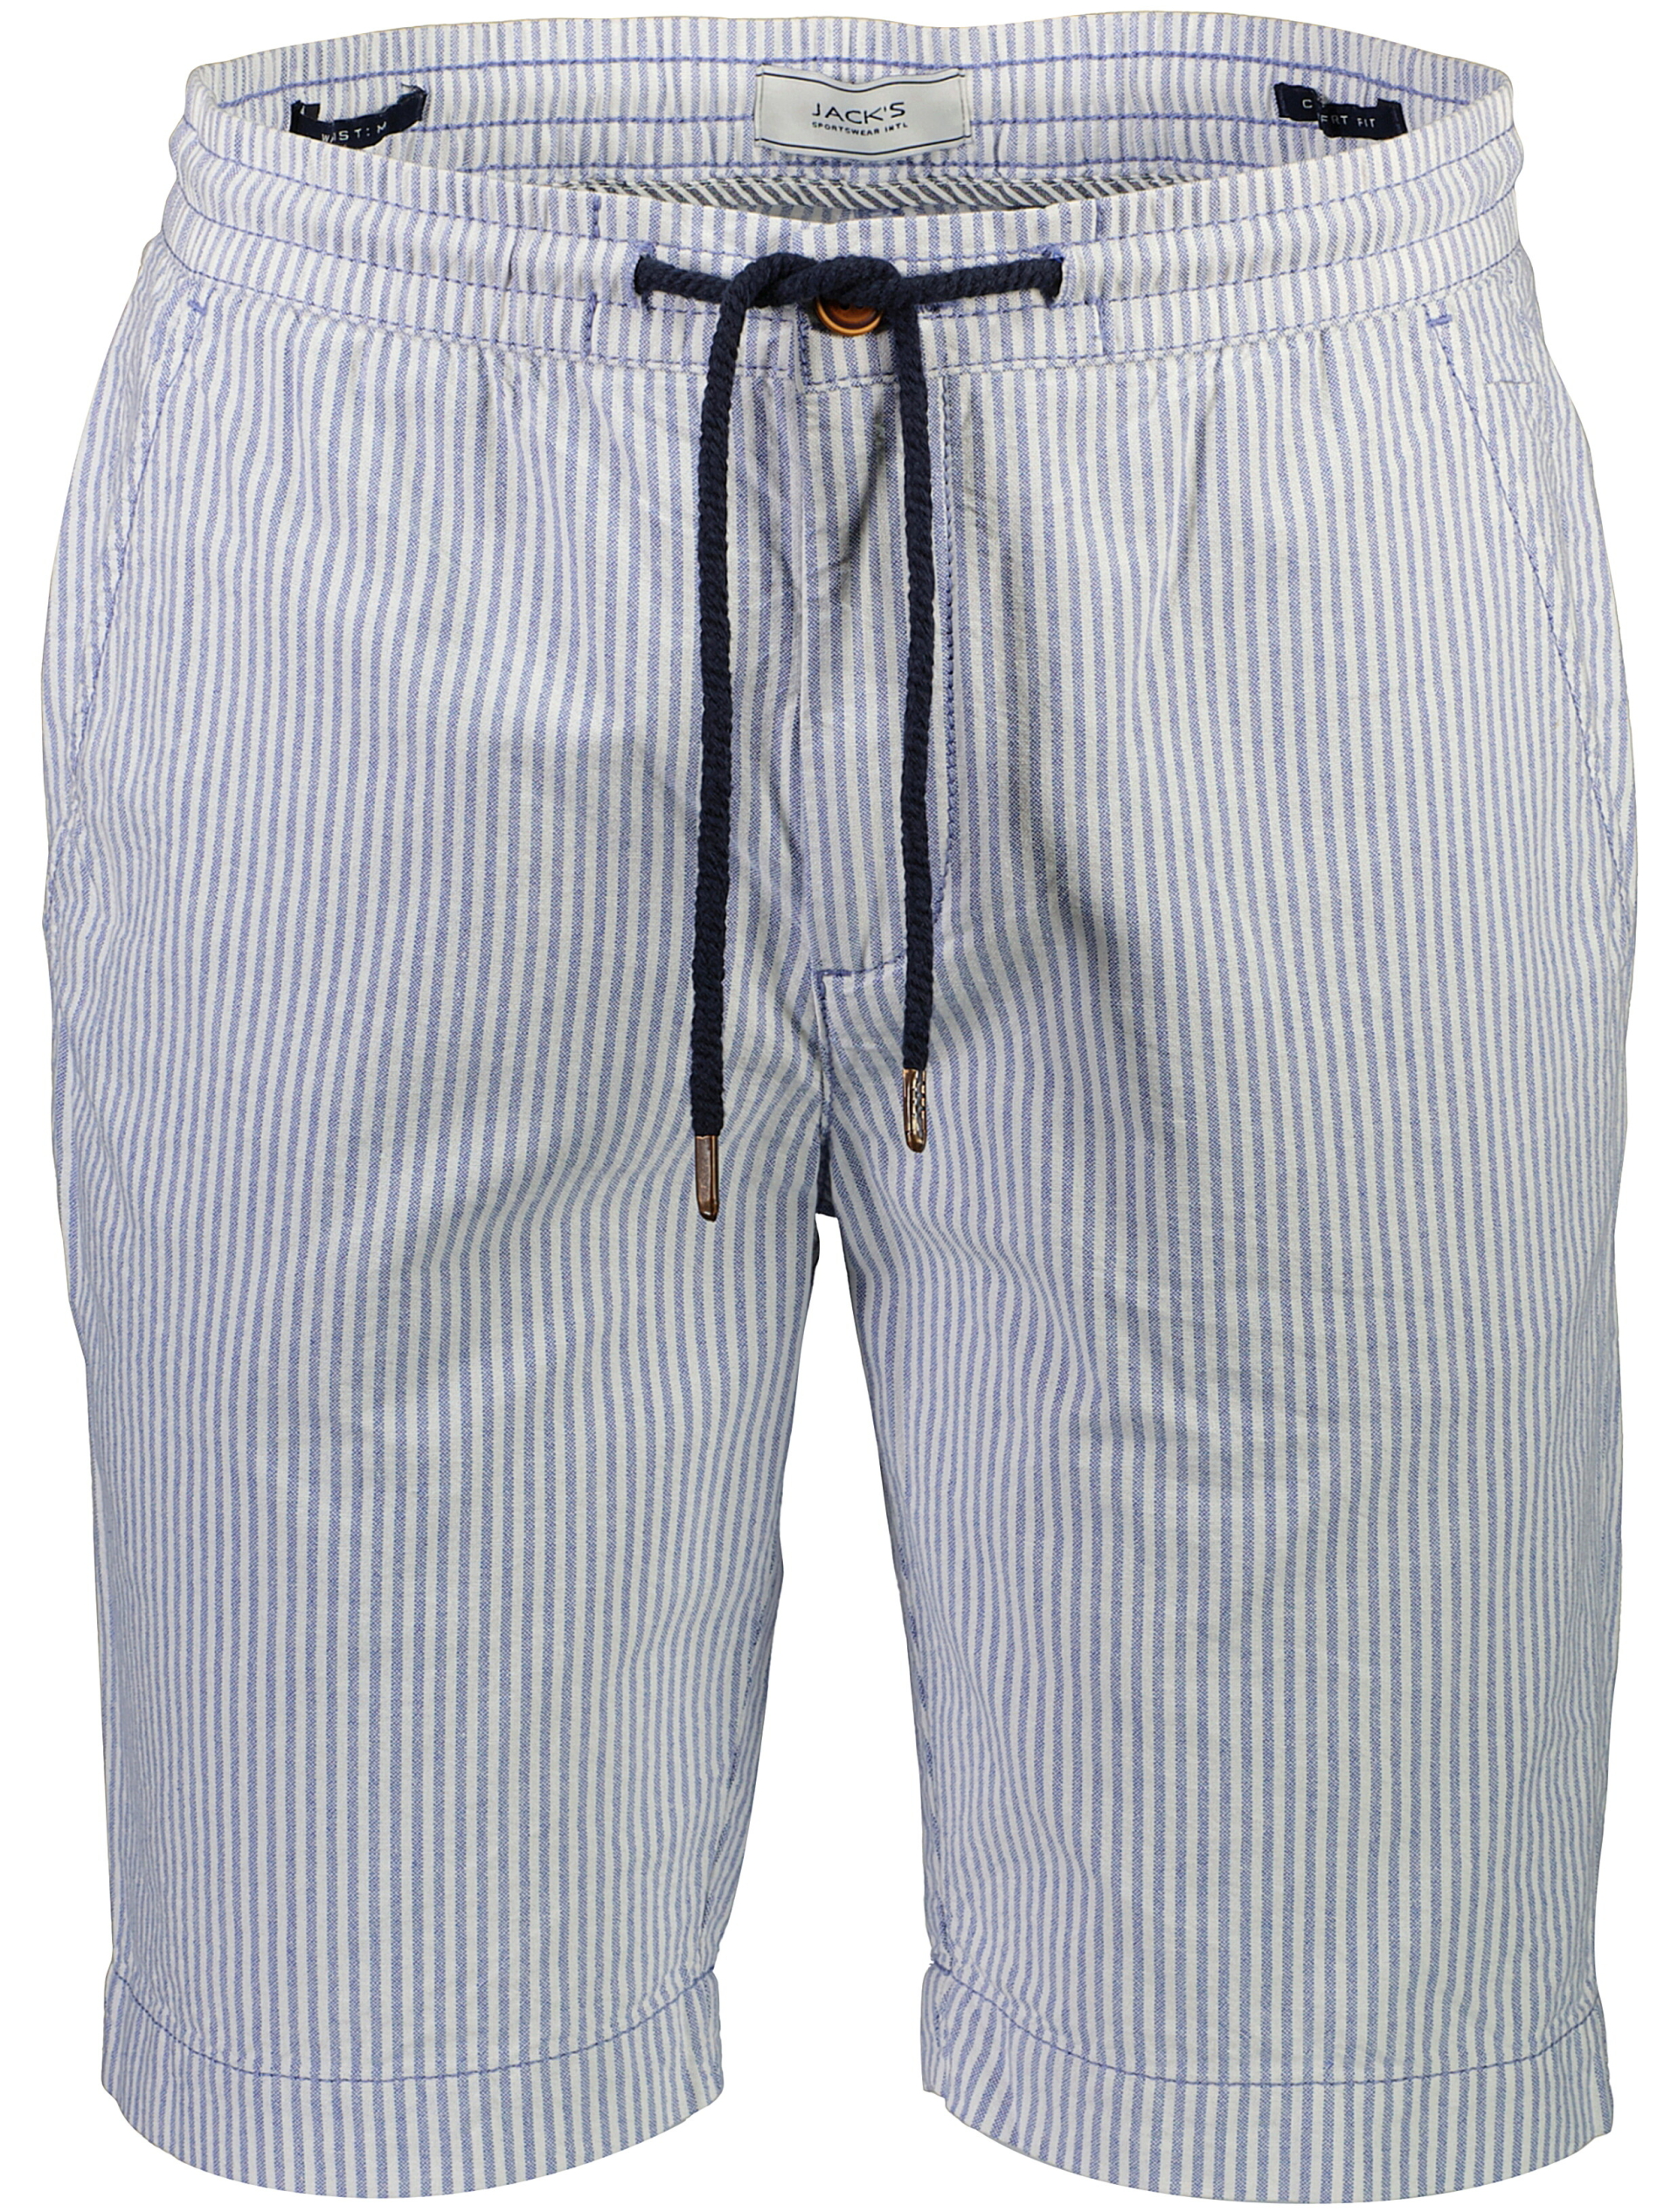 Jack's Casual shorts blå / blue stripe